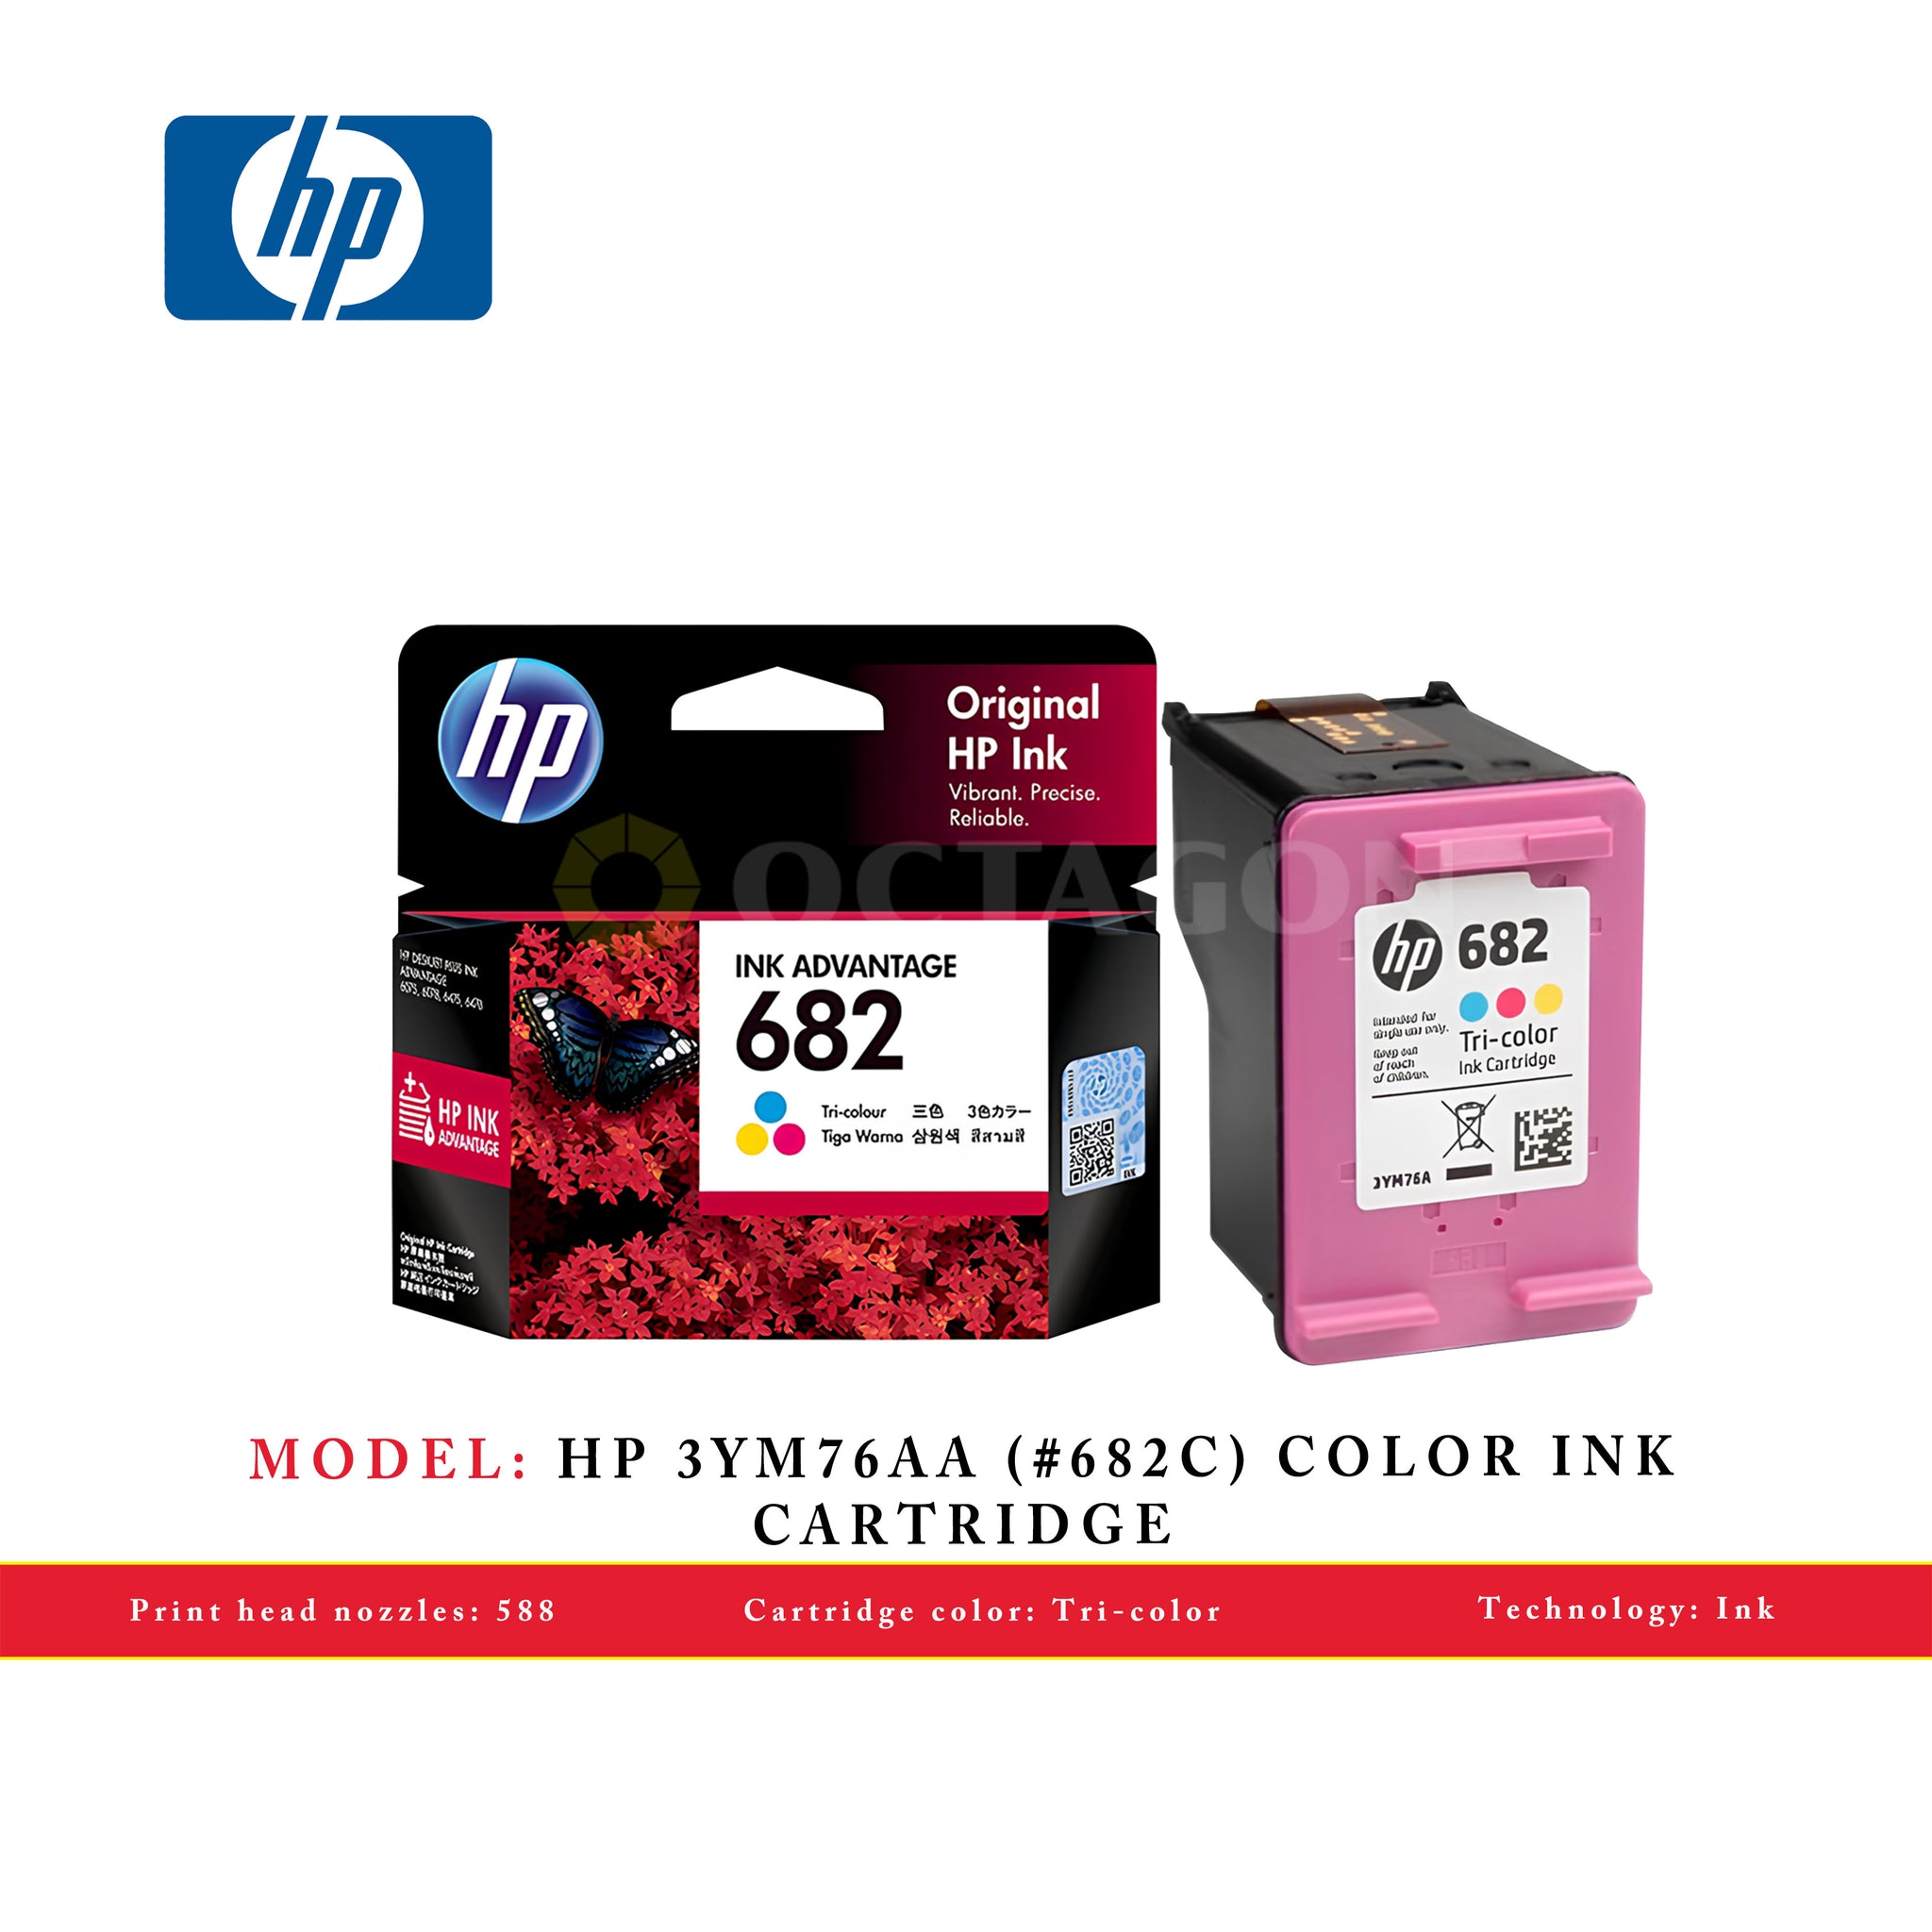 HP 3YM76AA (#682C) COLOR INK CARTRIDGE